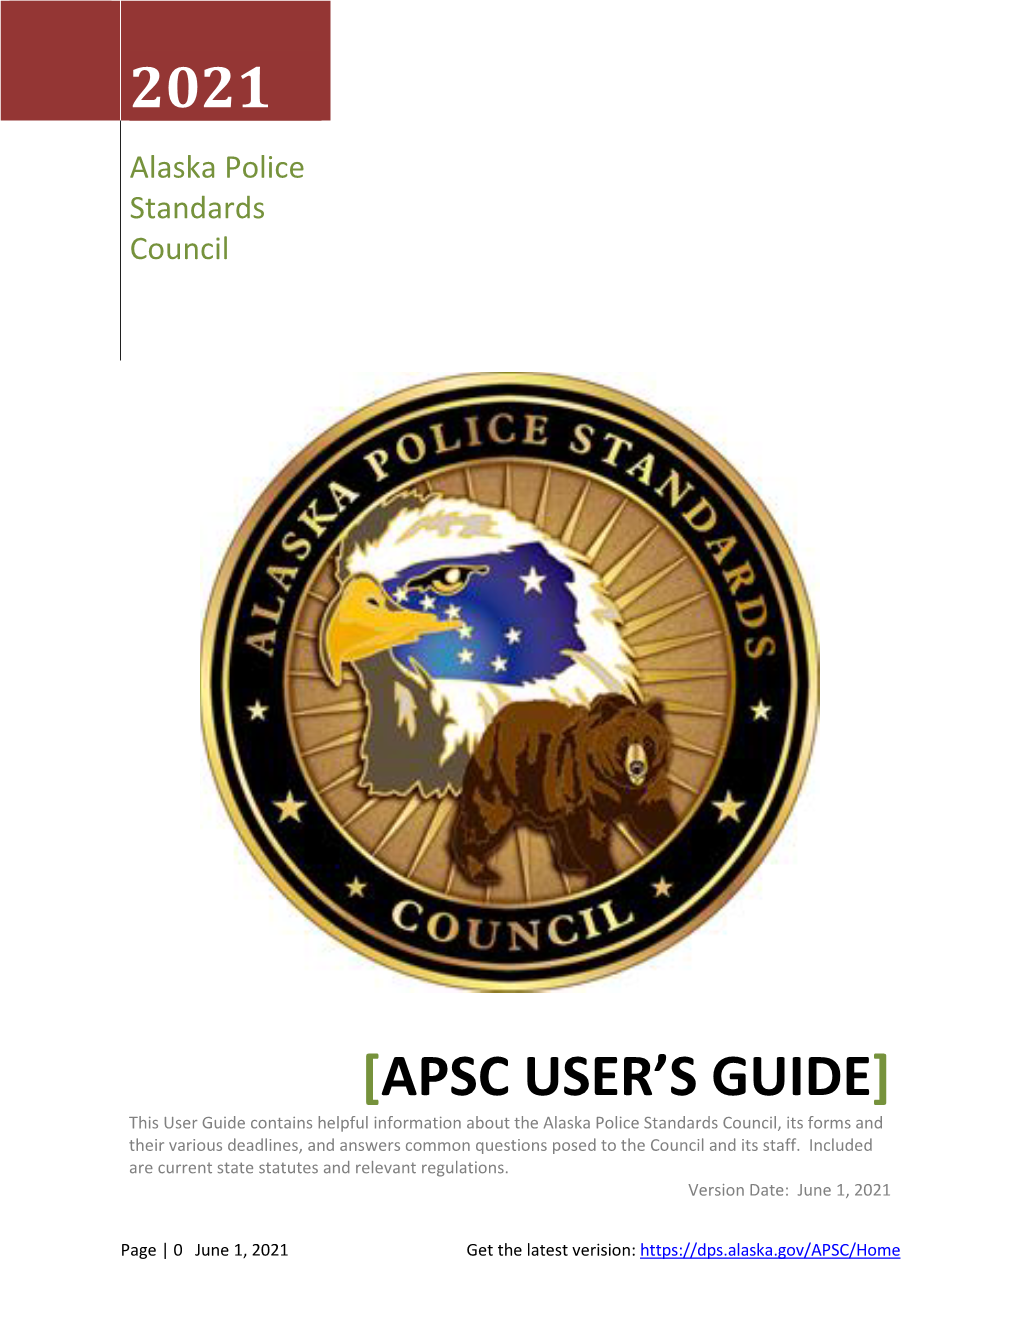 APSC User's Guide